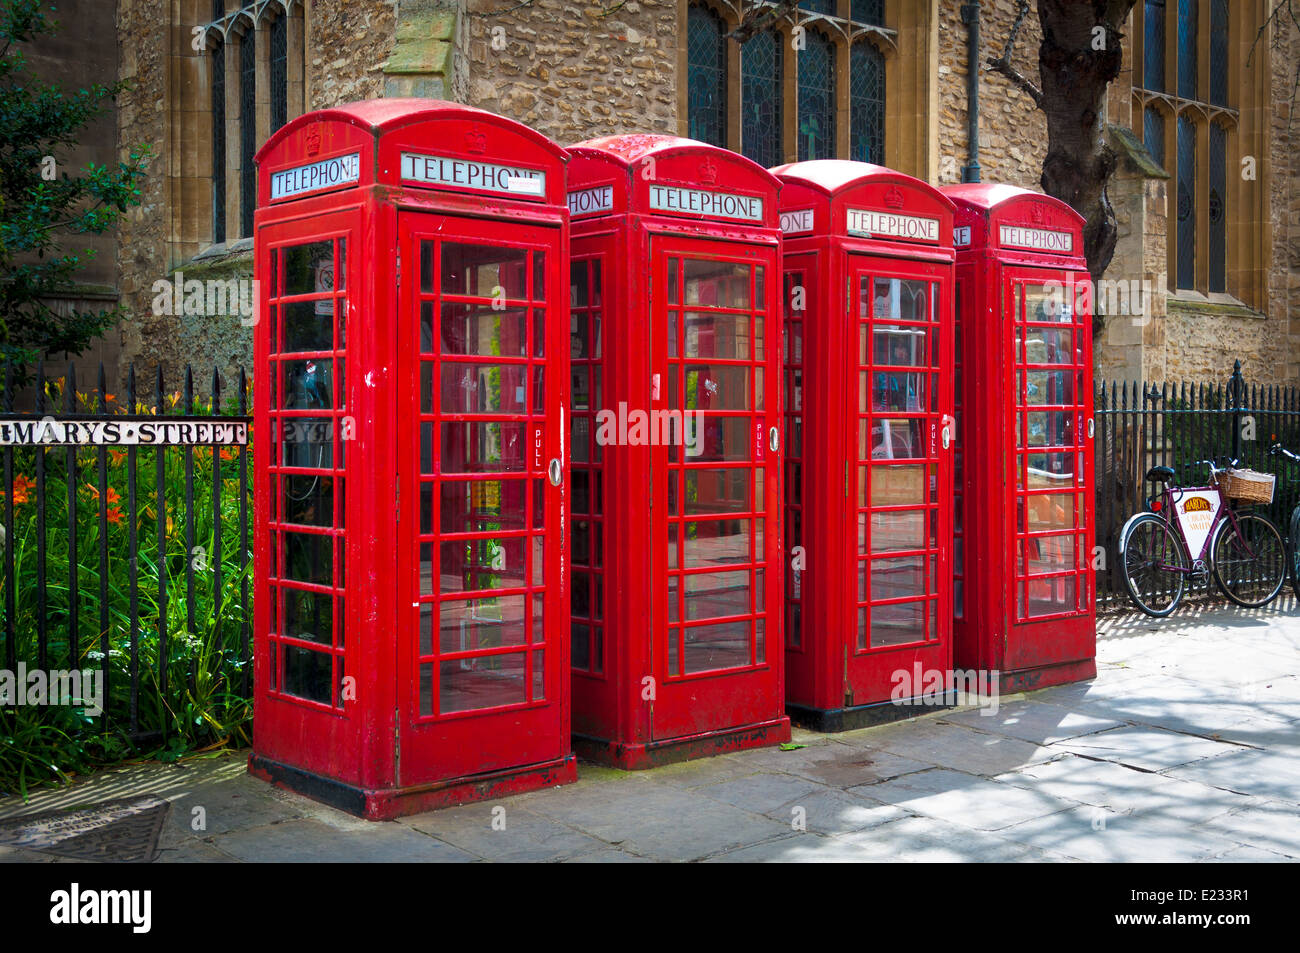 Row of red British telecom telephone boxes, England, UK Stock Photo